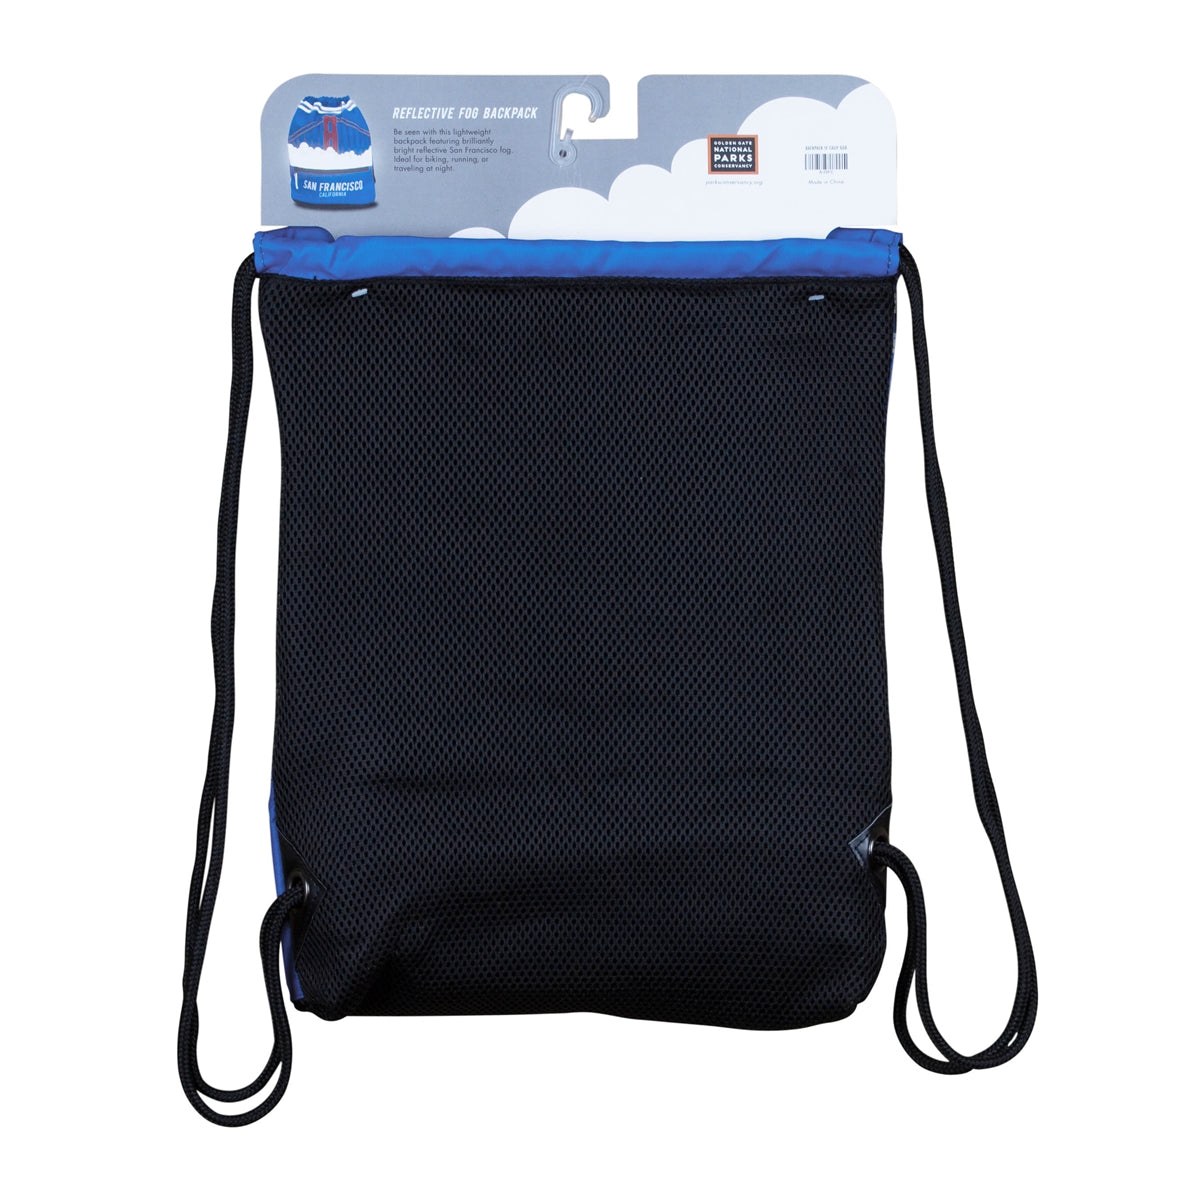 Blue drawstring backpack with orange Golden Gate Bridge design and reflective silver fog on body of bag.